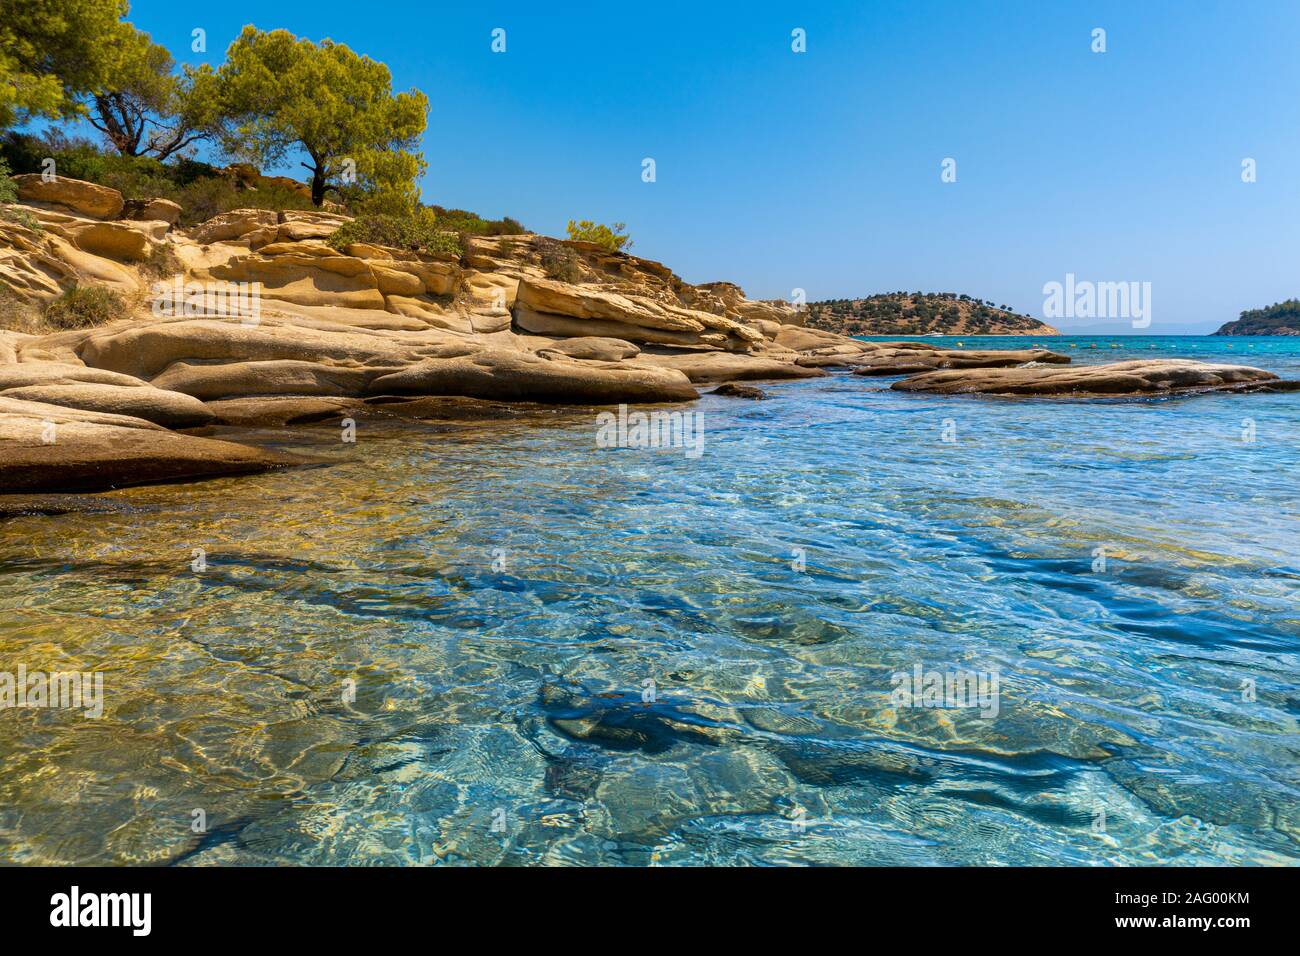 Trees growing on rocks and sea in Greece horizontal Stock Photo